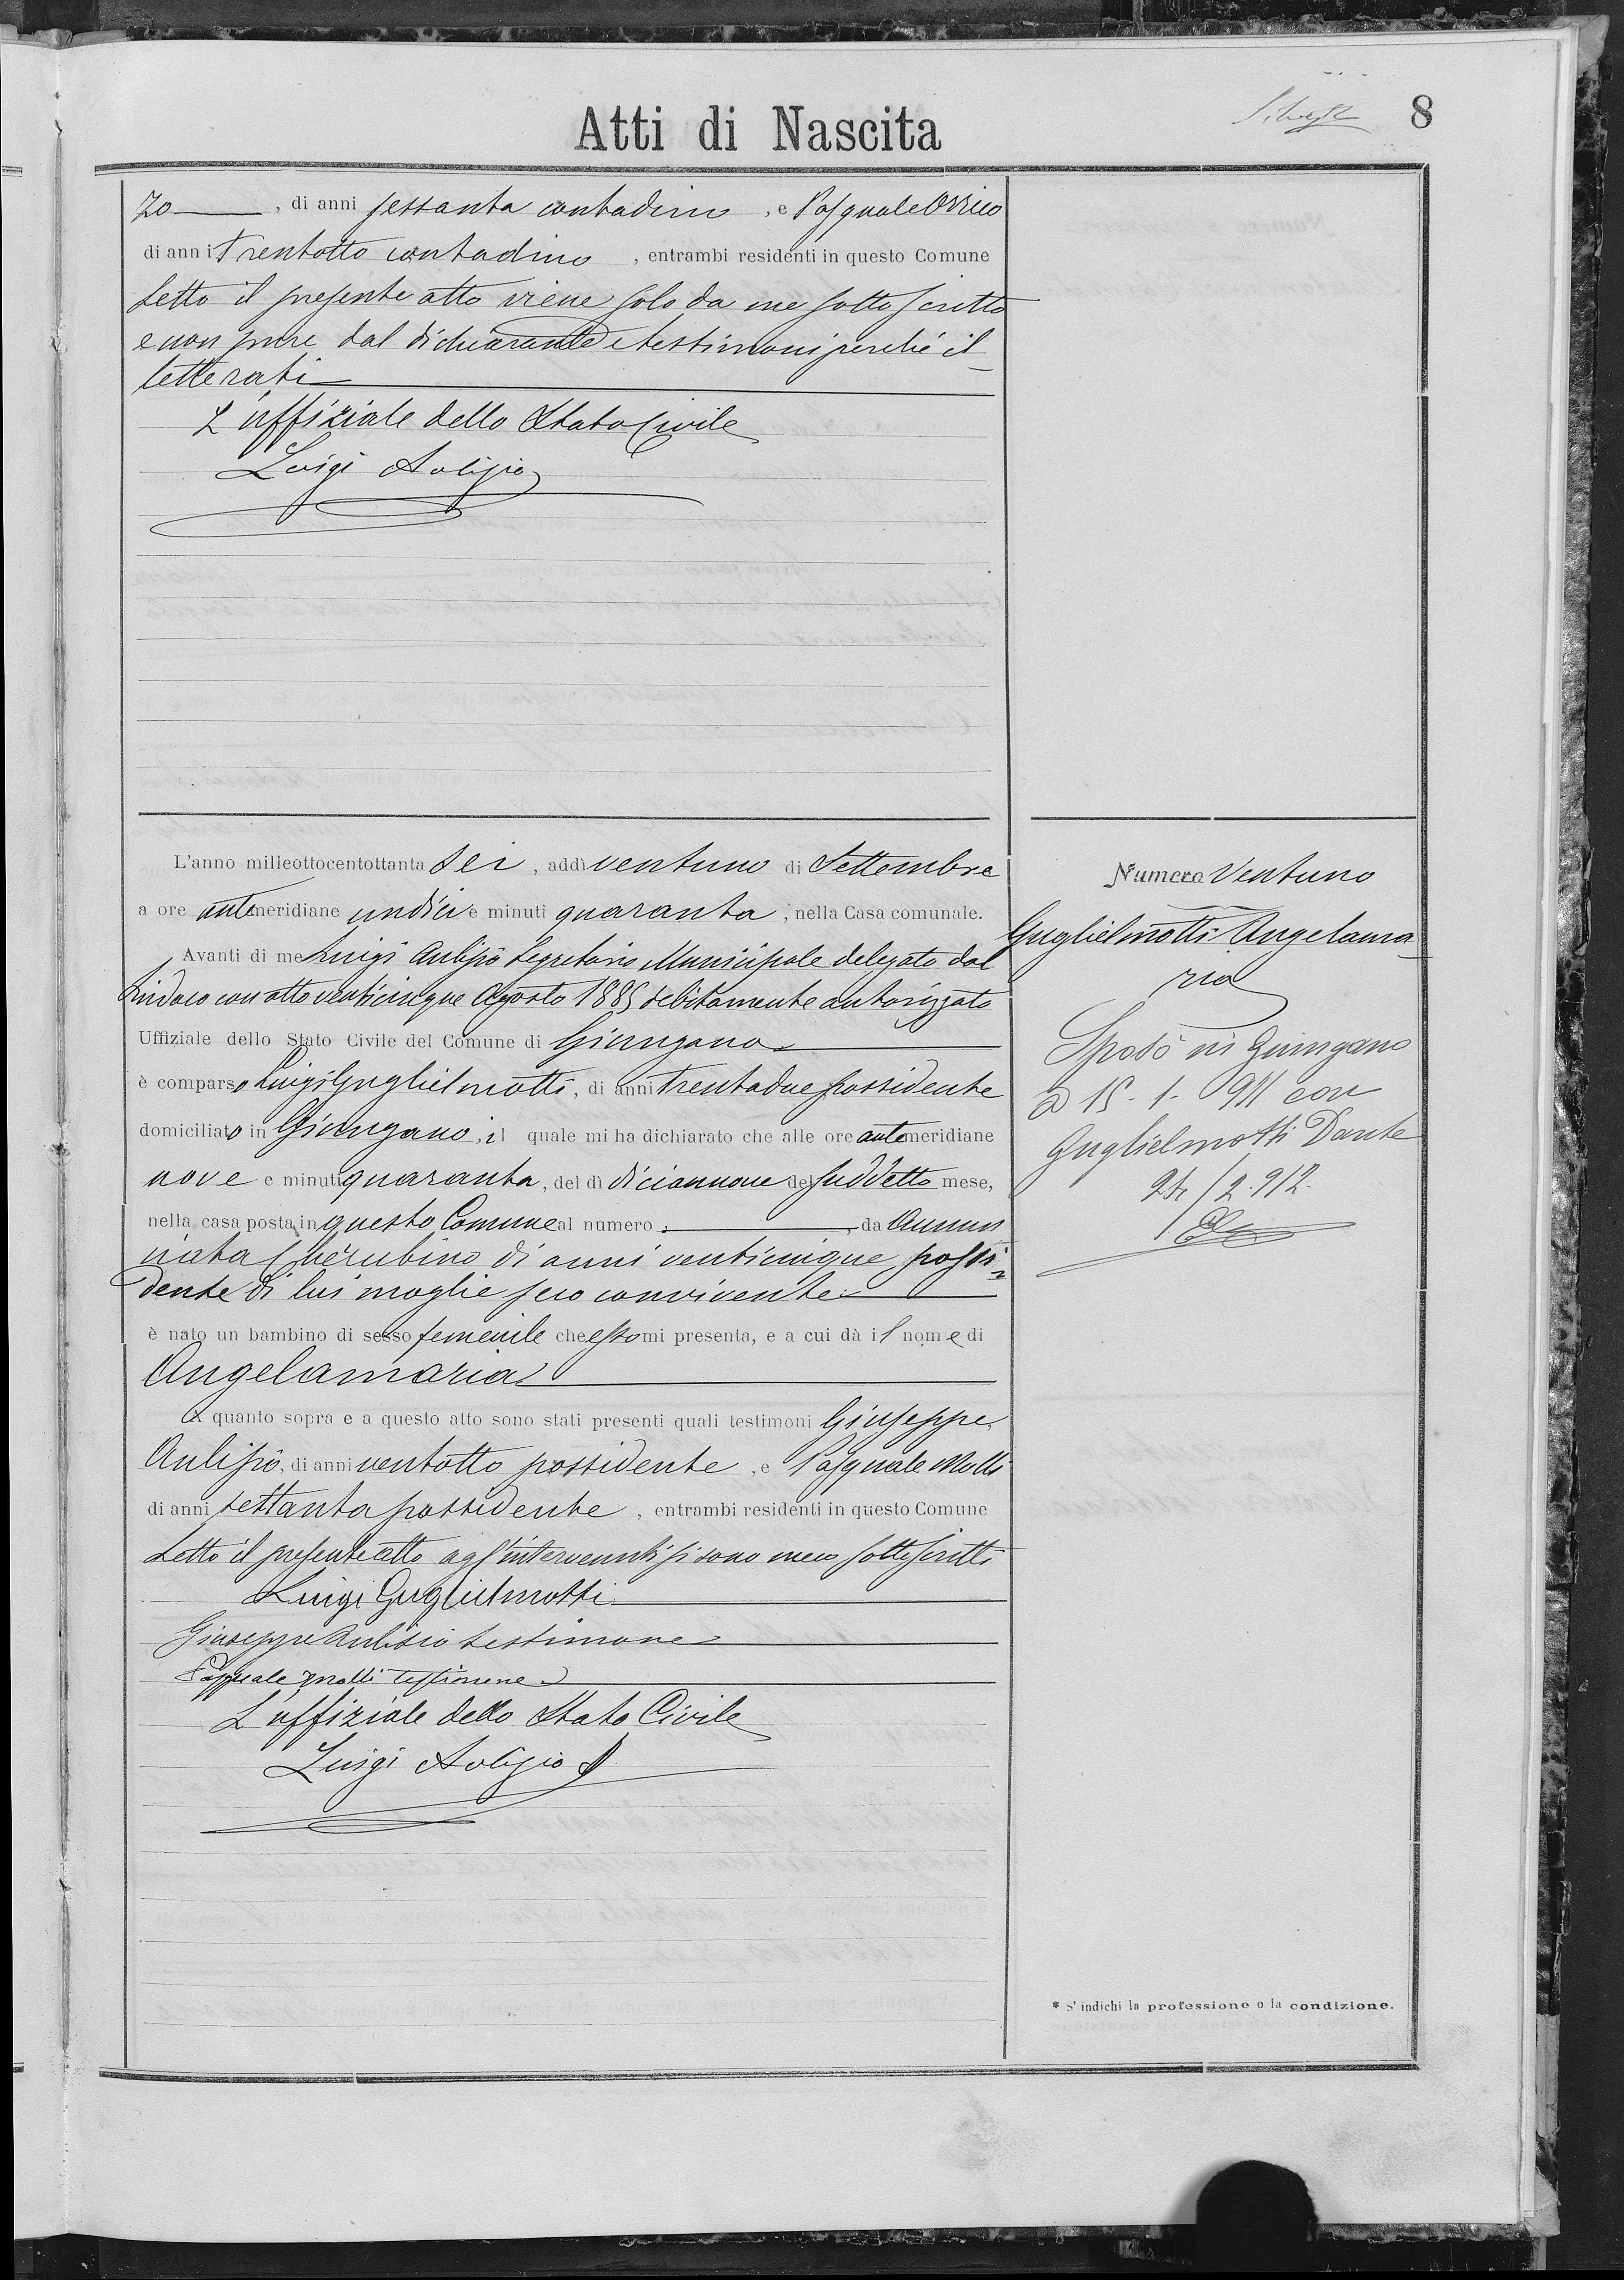 Angela Guglielmotti, Birth Certificate